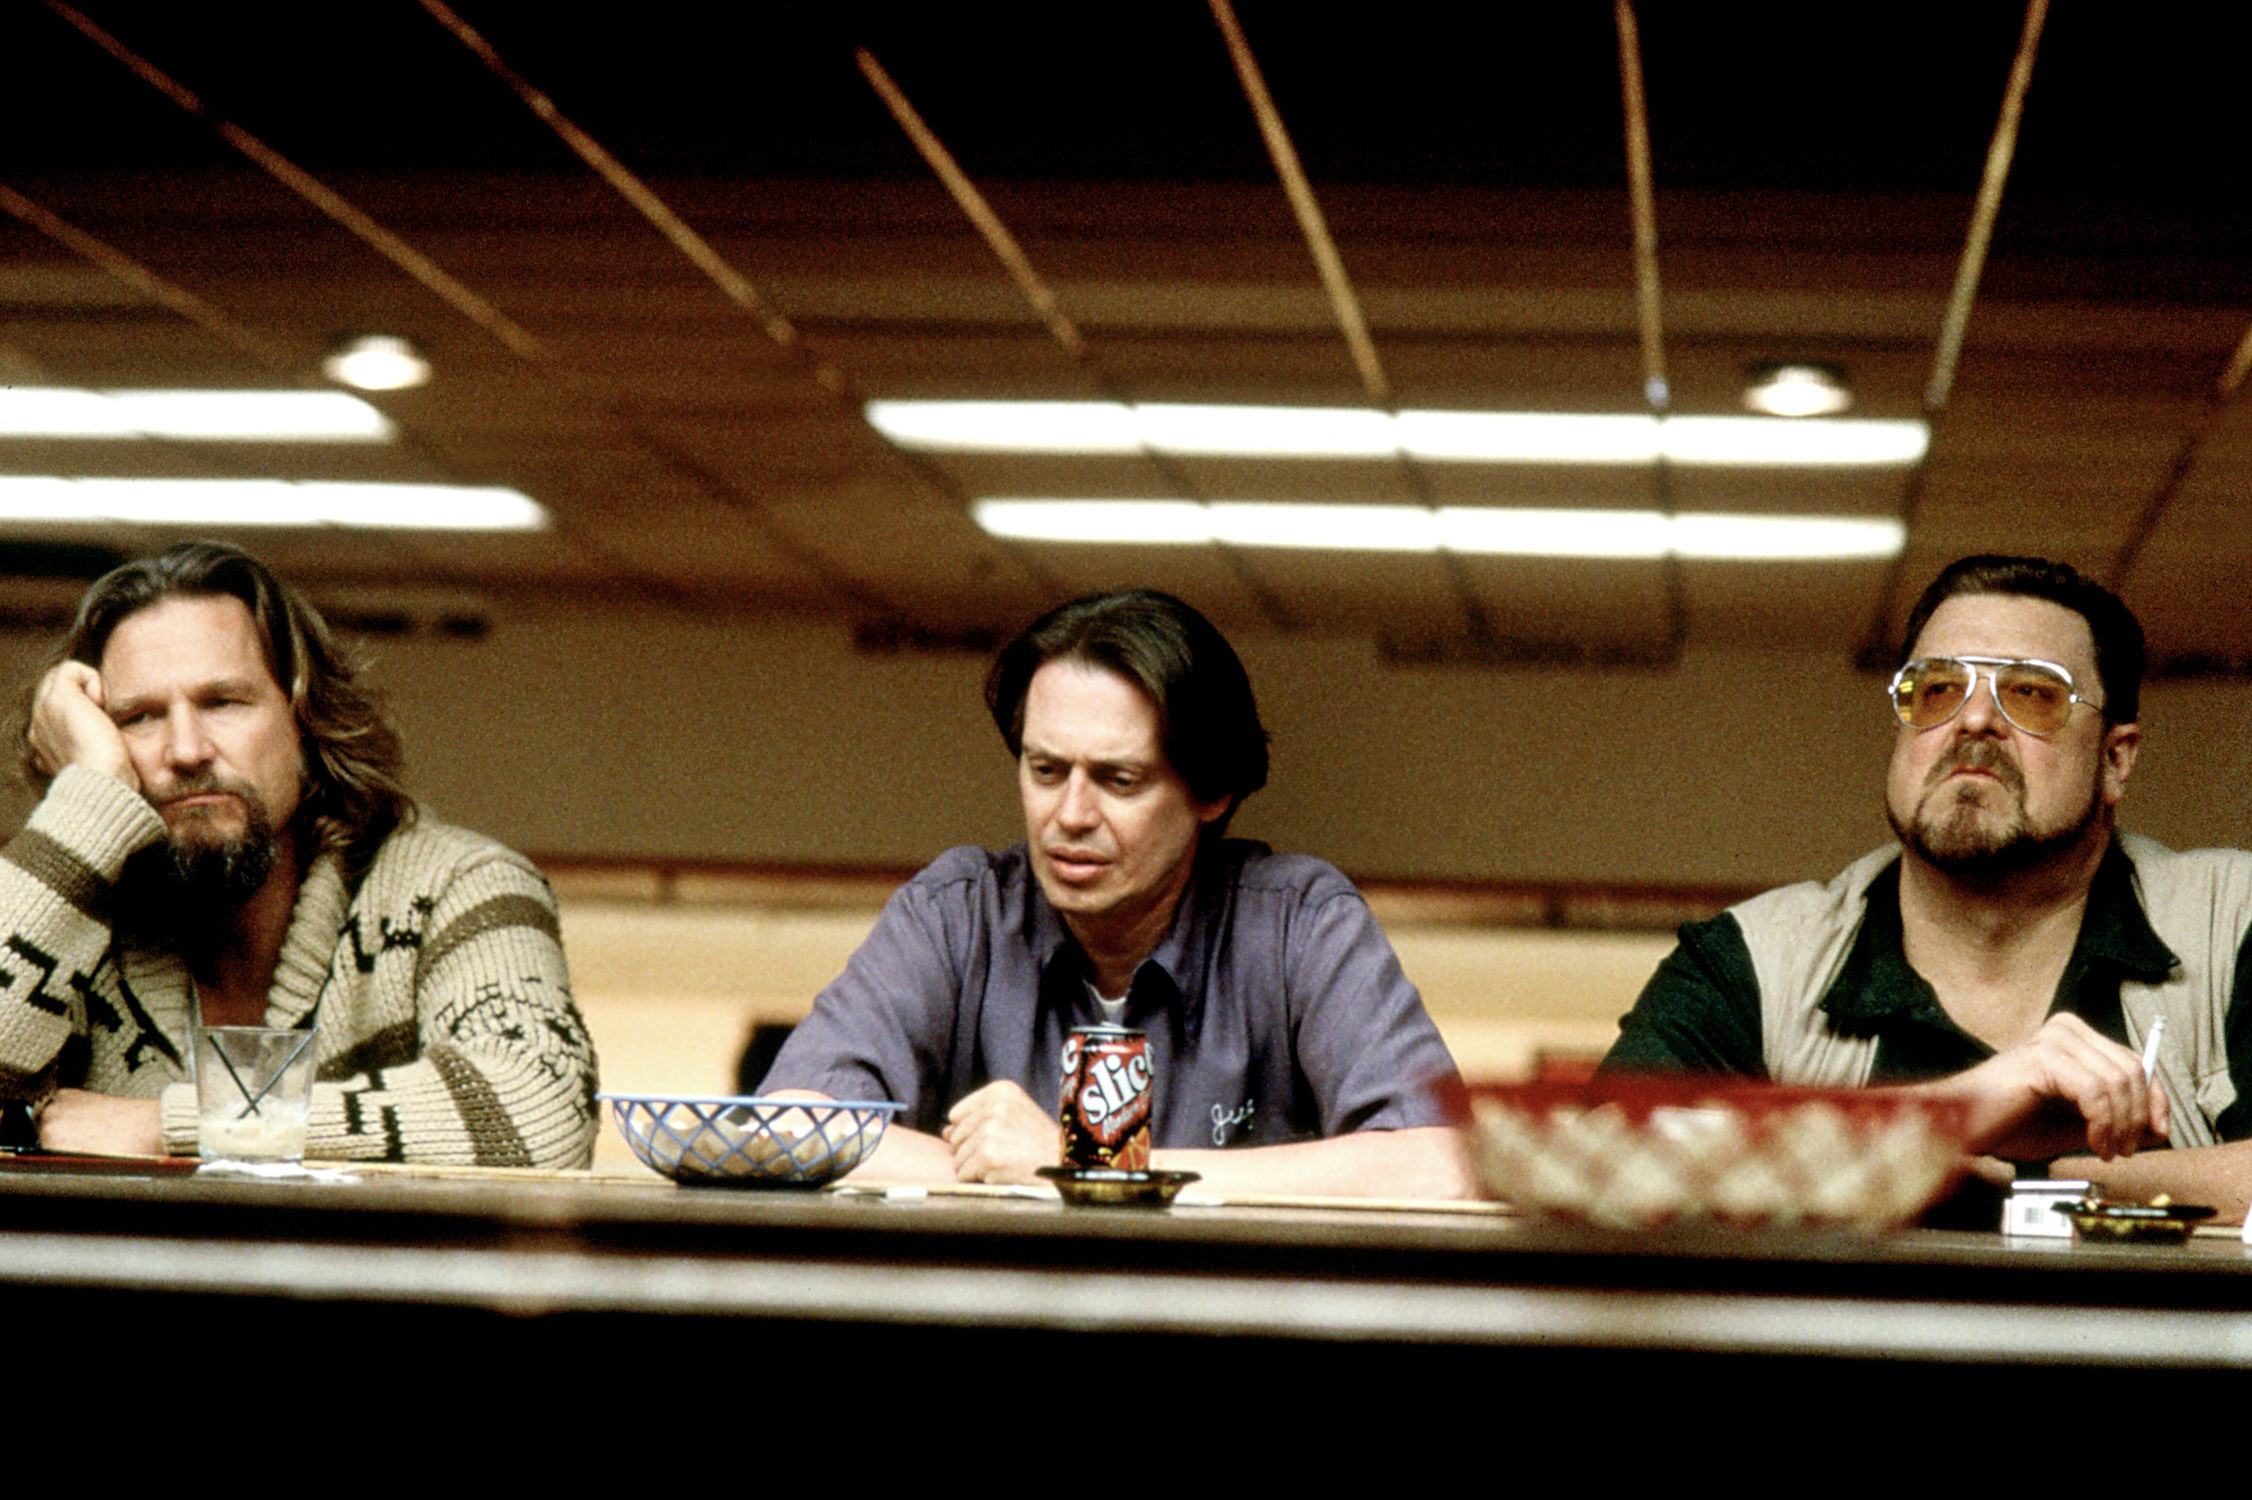 Jeff Bridges, Steve Buscemi, and John Goodman sit at a bar together